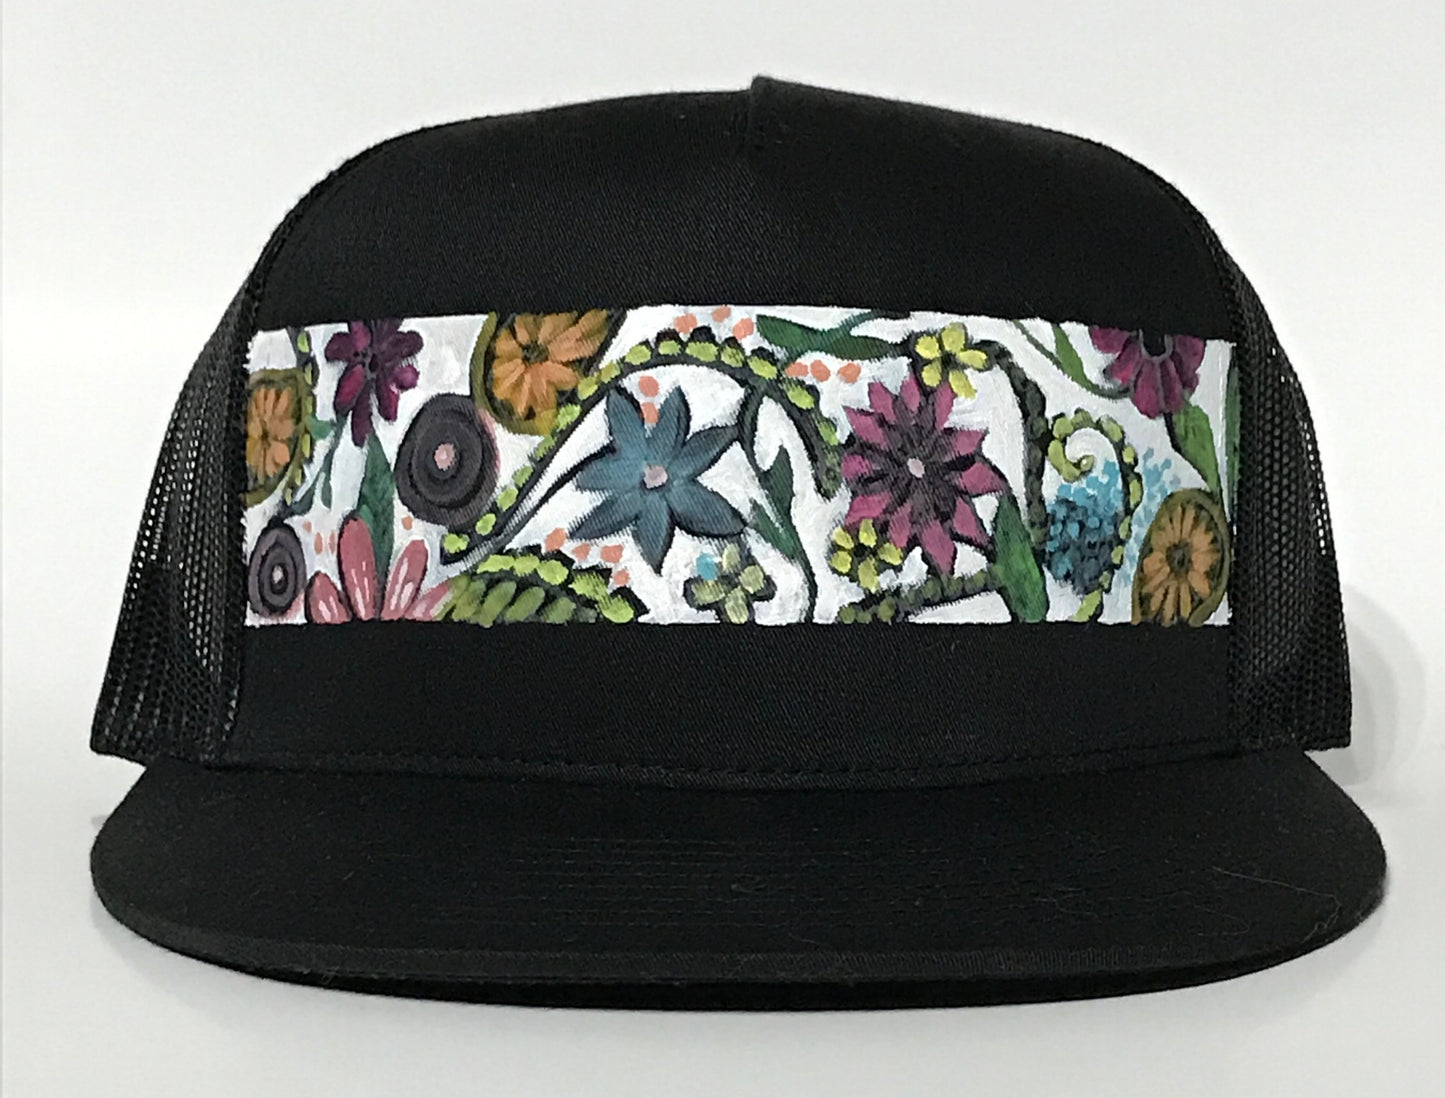 "flowers" Hand Painted on Black Snapback Fabric Back Hat